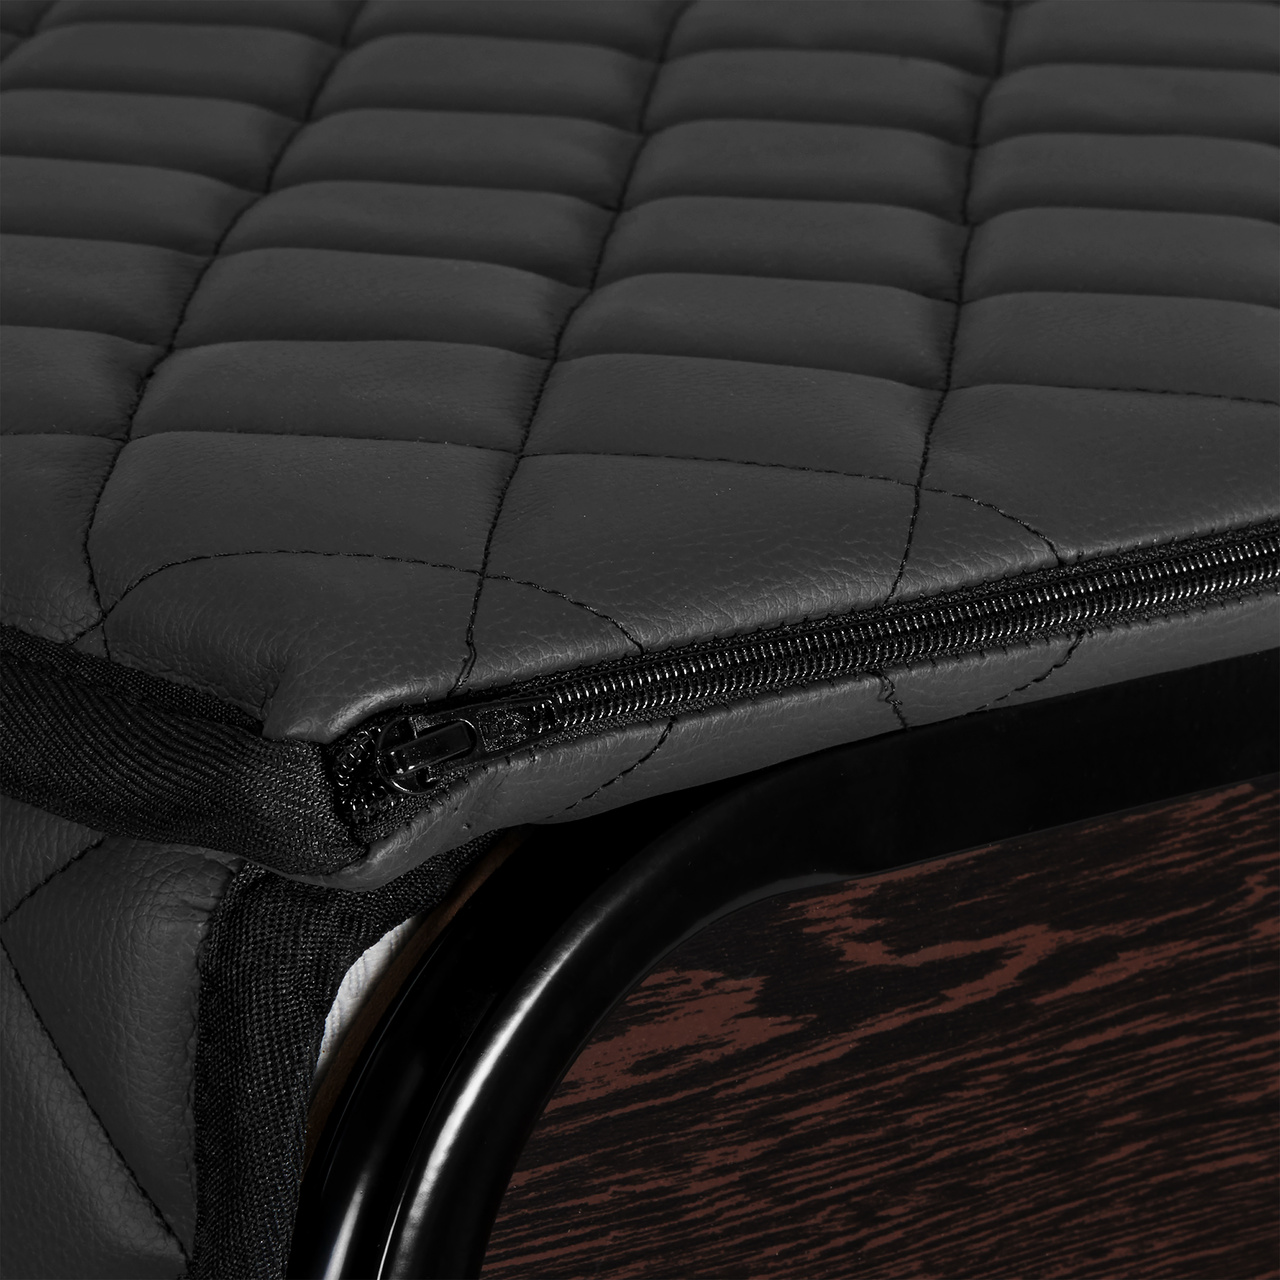 Rollaway folding bed Edward Ritz - PU leather